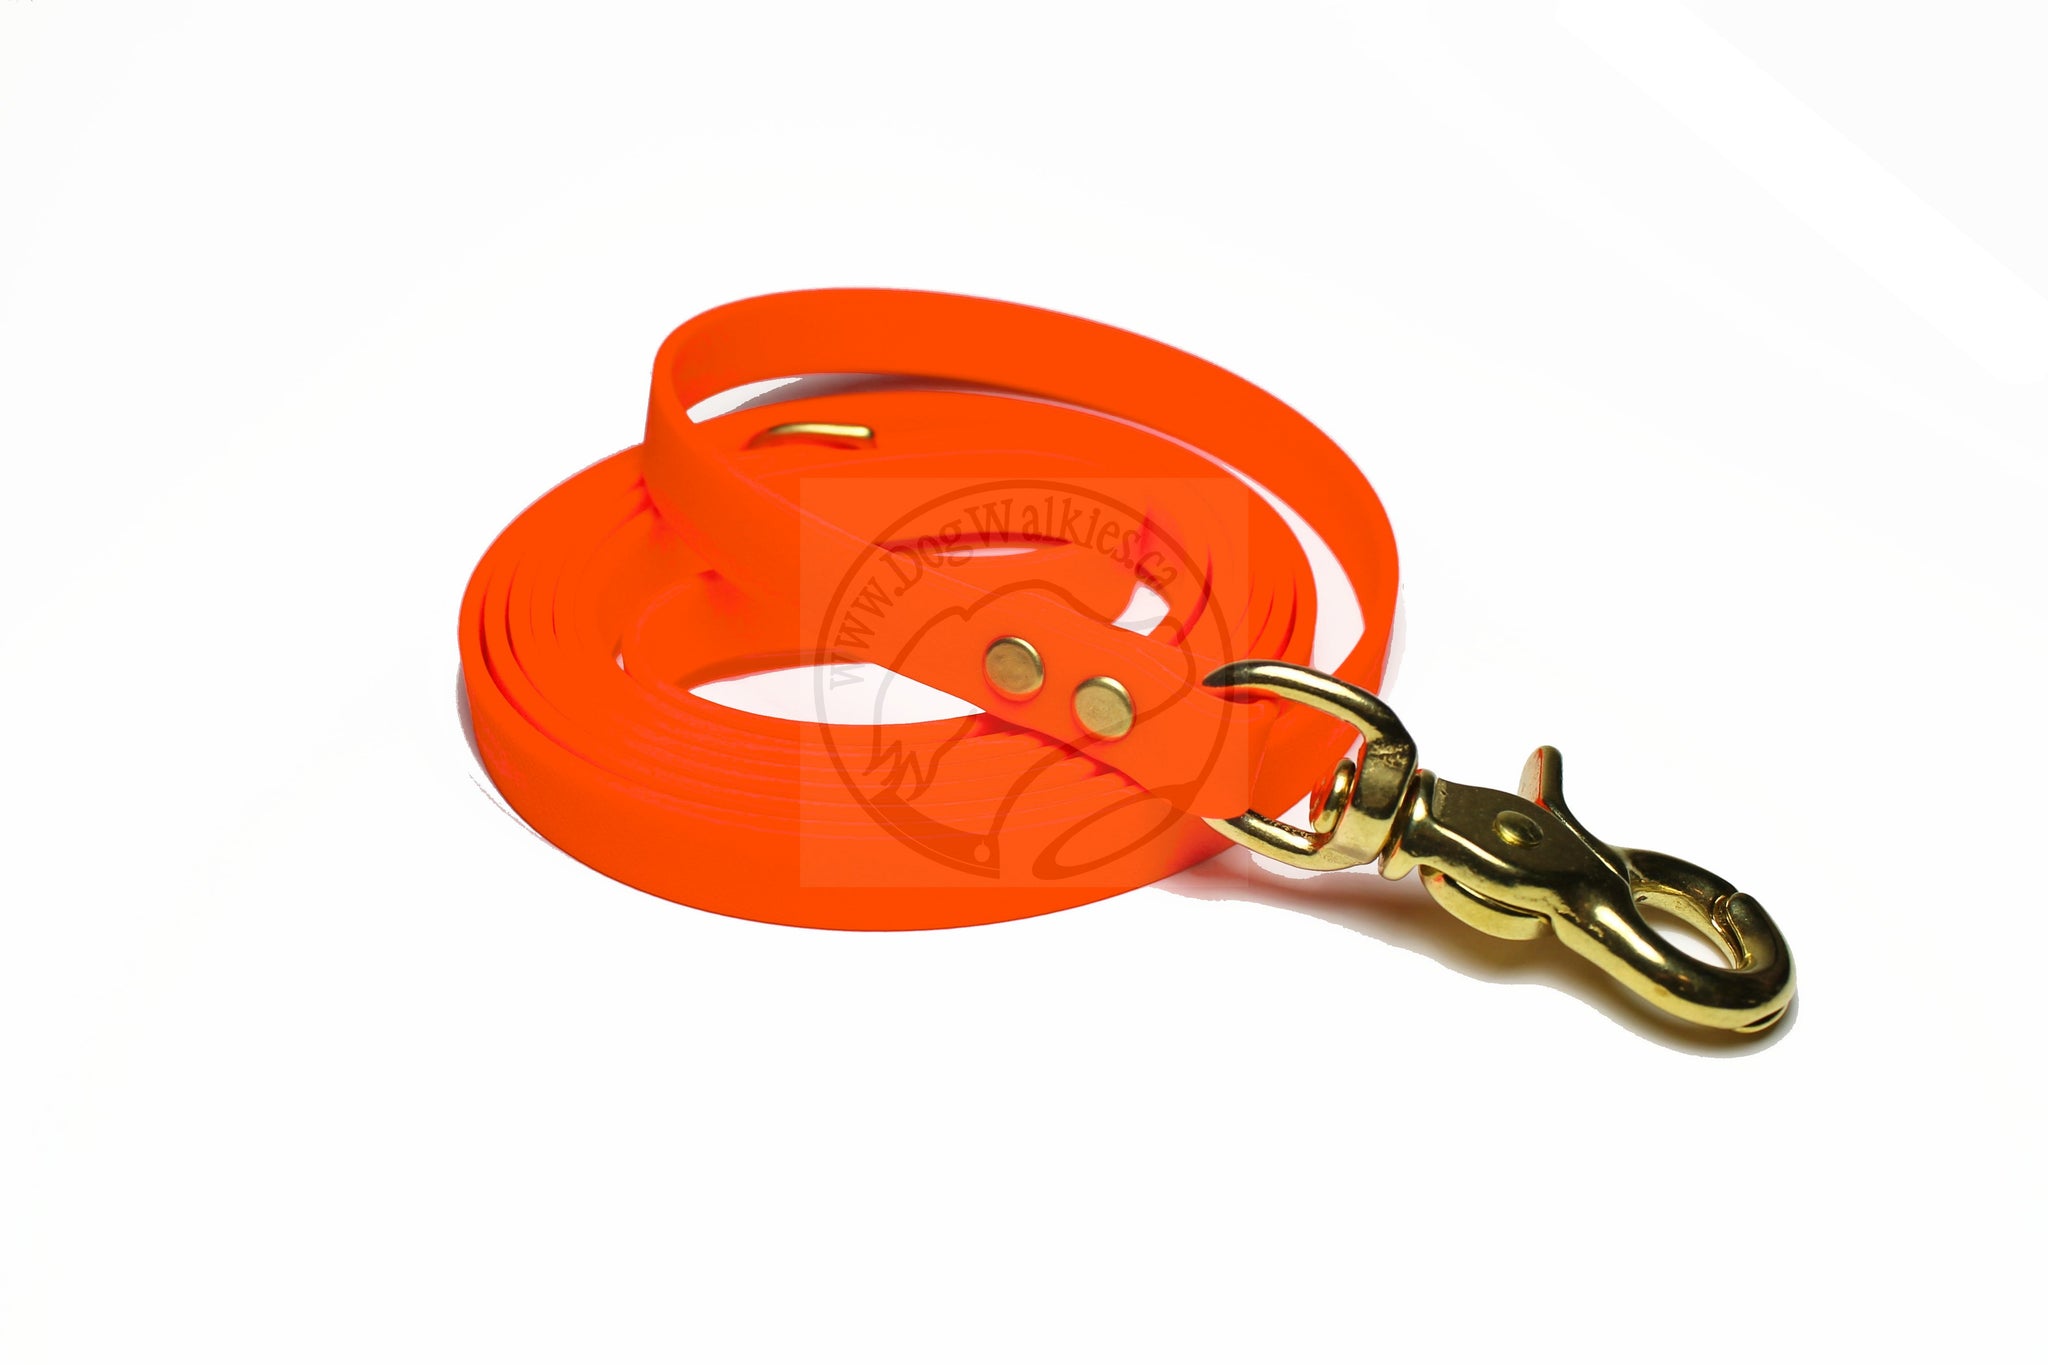 Neon Blaze Orange Biothane Small Dog Leash